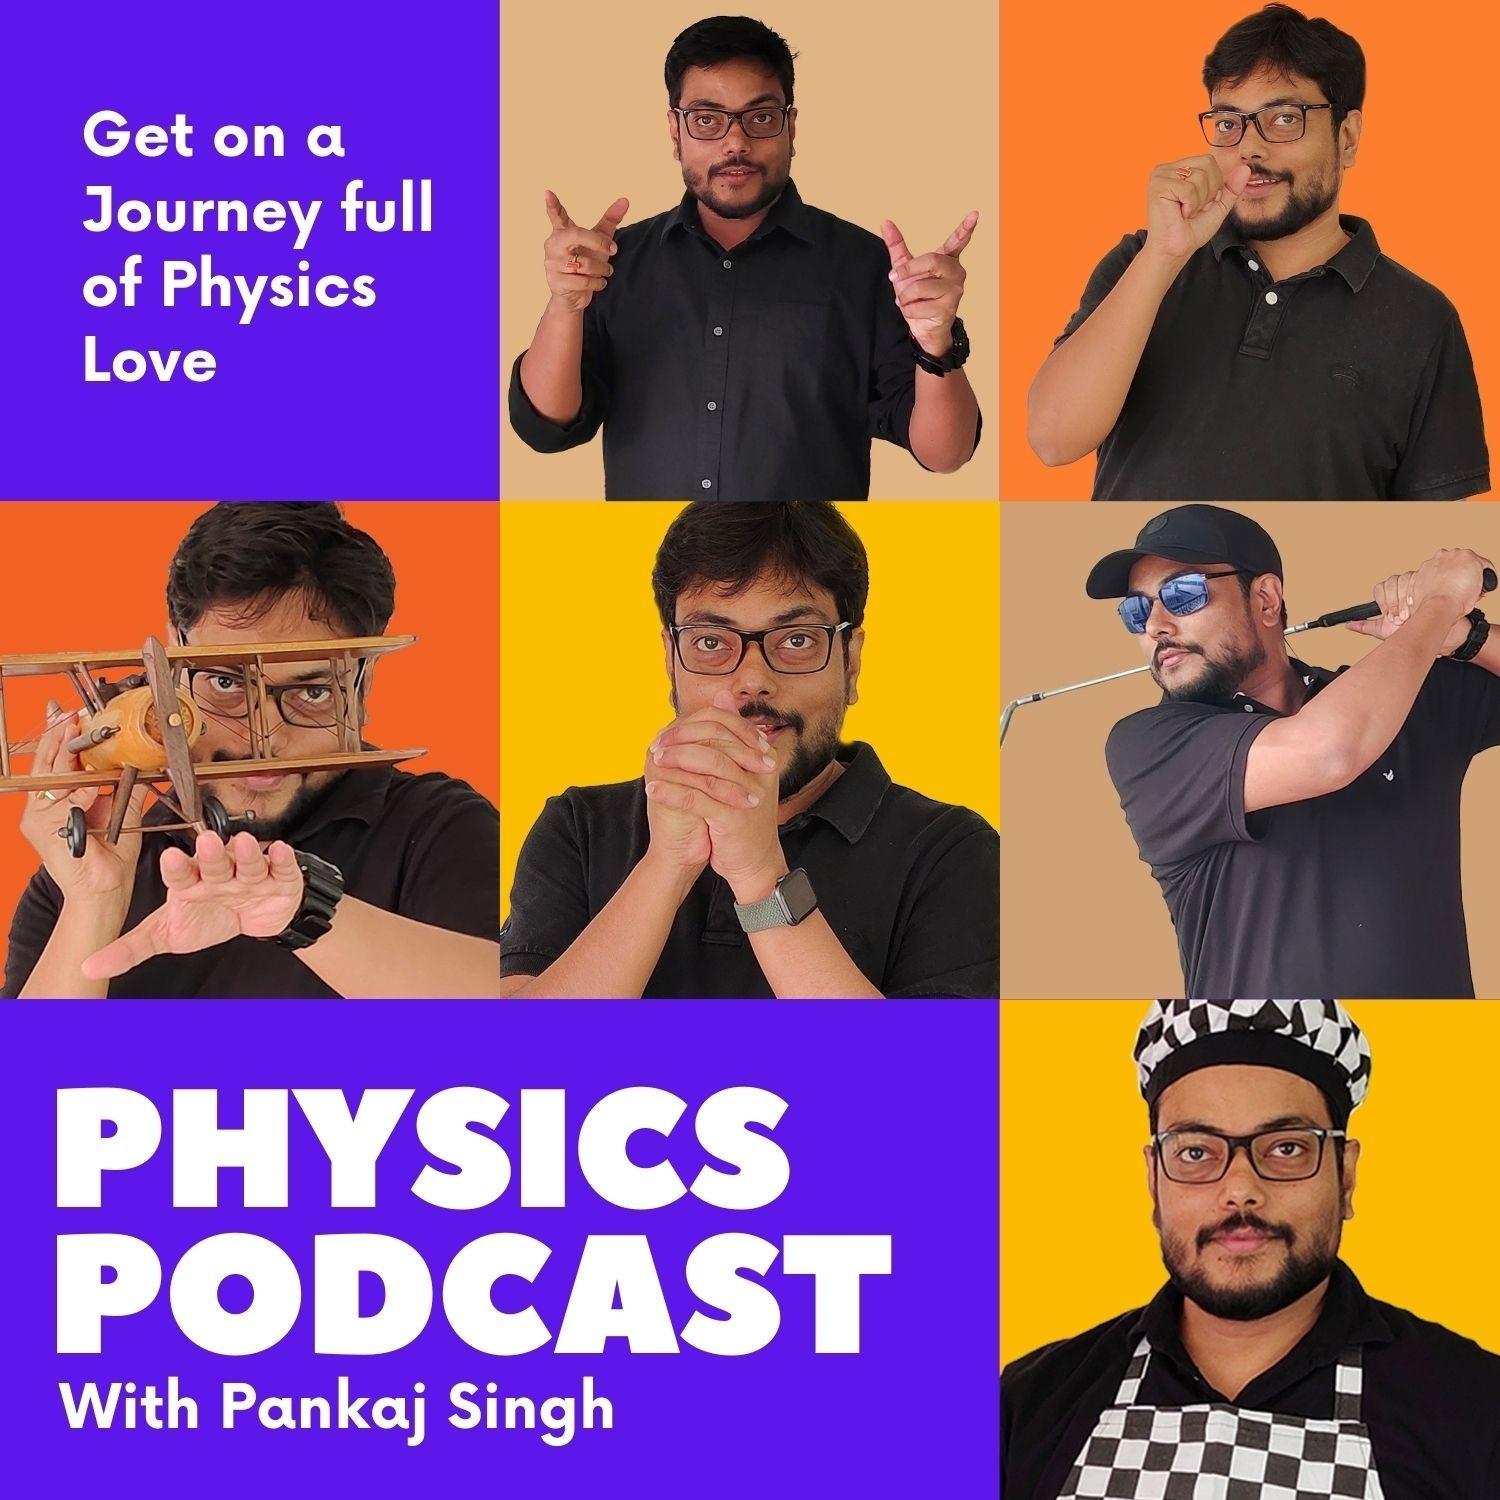 Physics Podcast with Pankaj Singh 